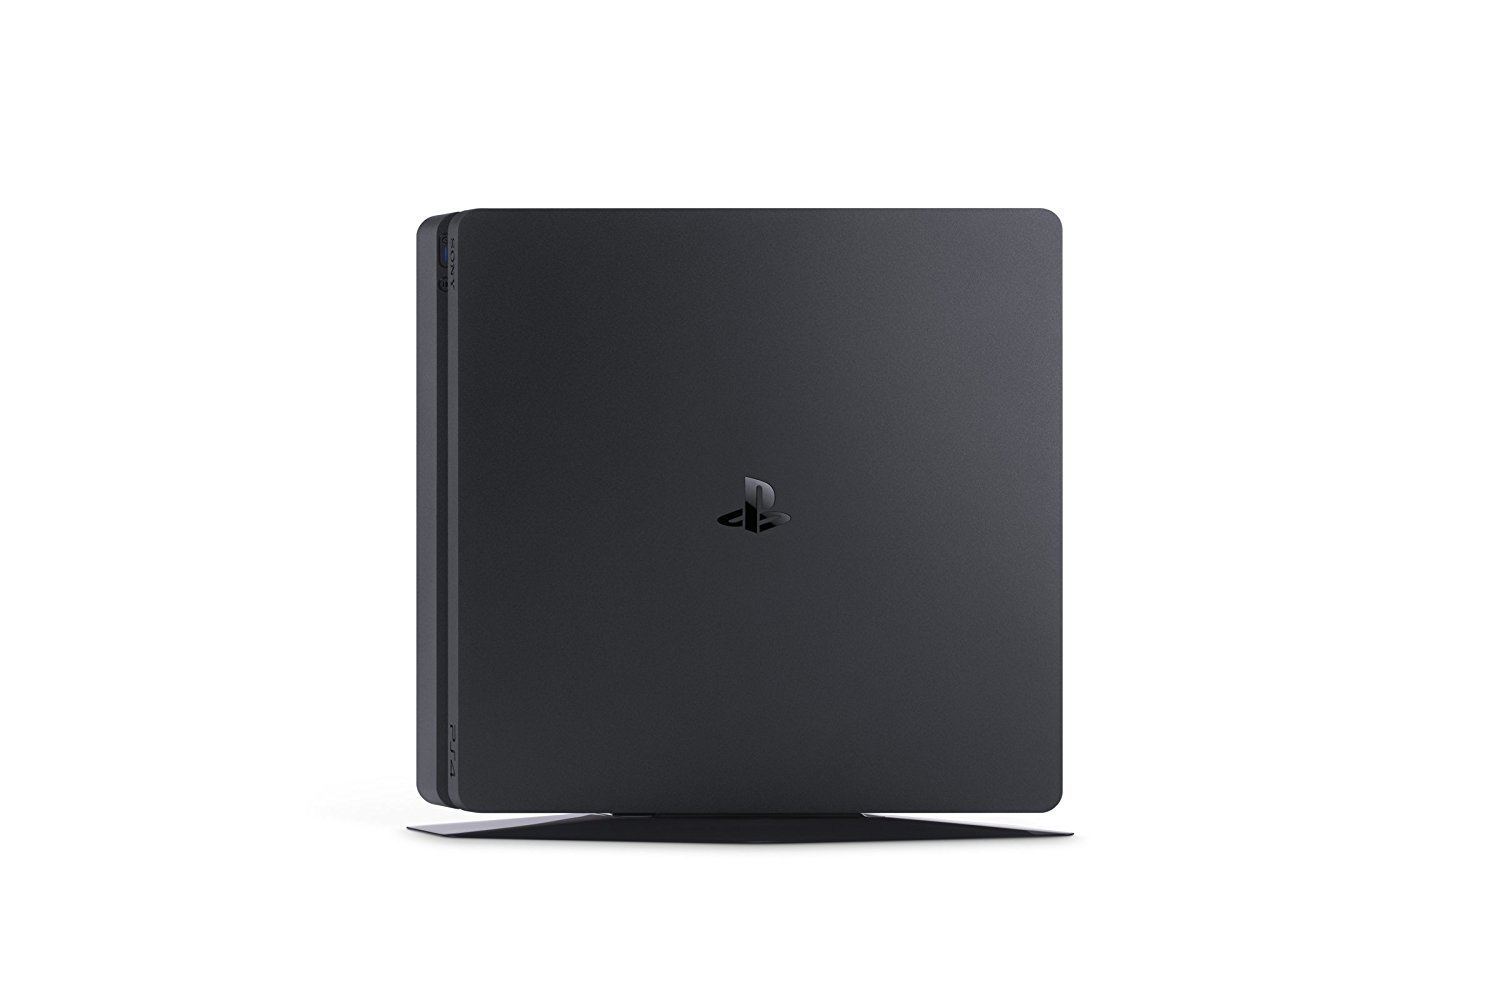 PlayStation 4 CUH-2200 Series 500GB HDD (Jet Black) - Bitcoin